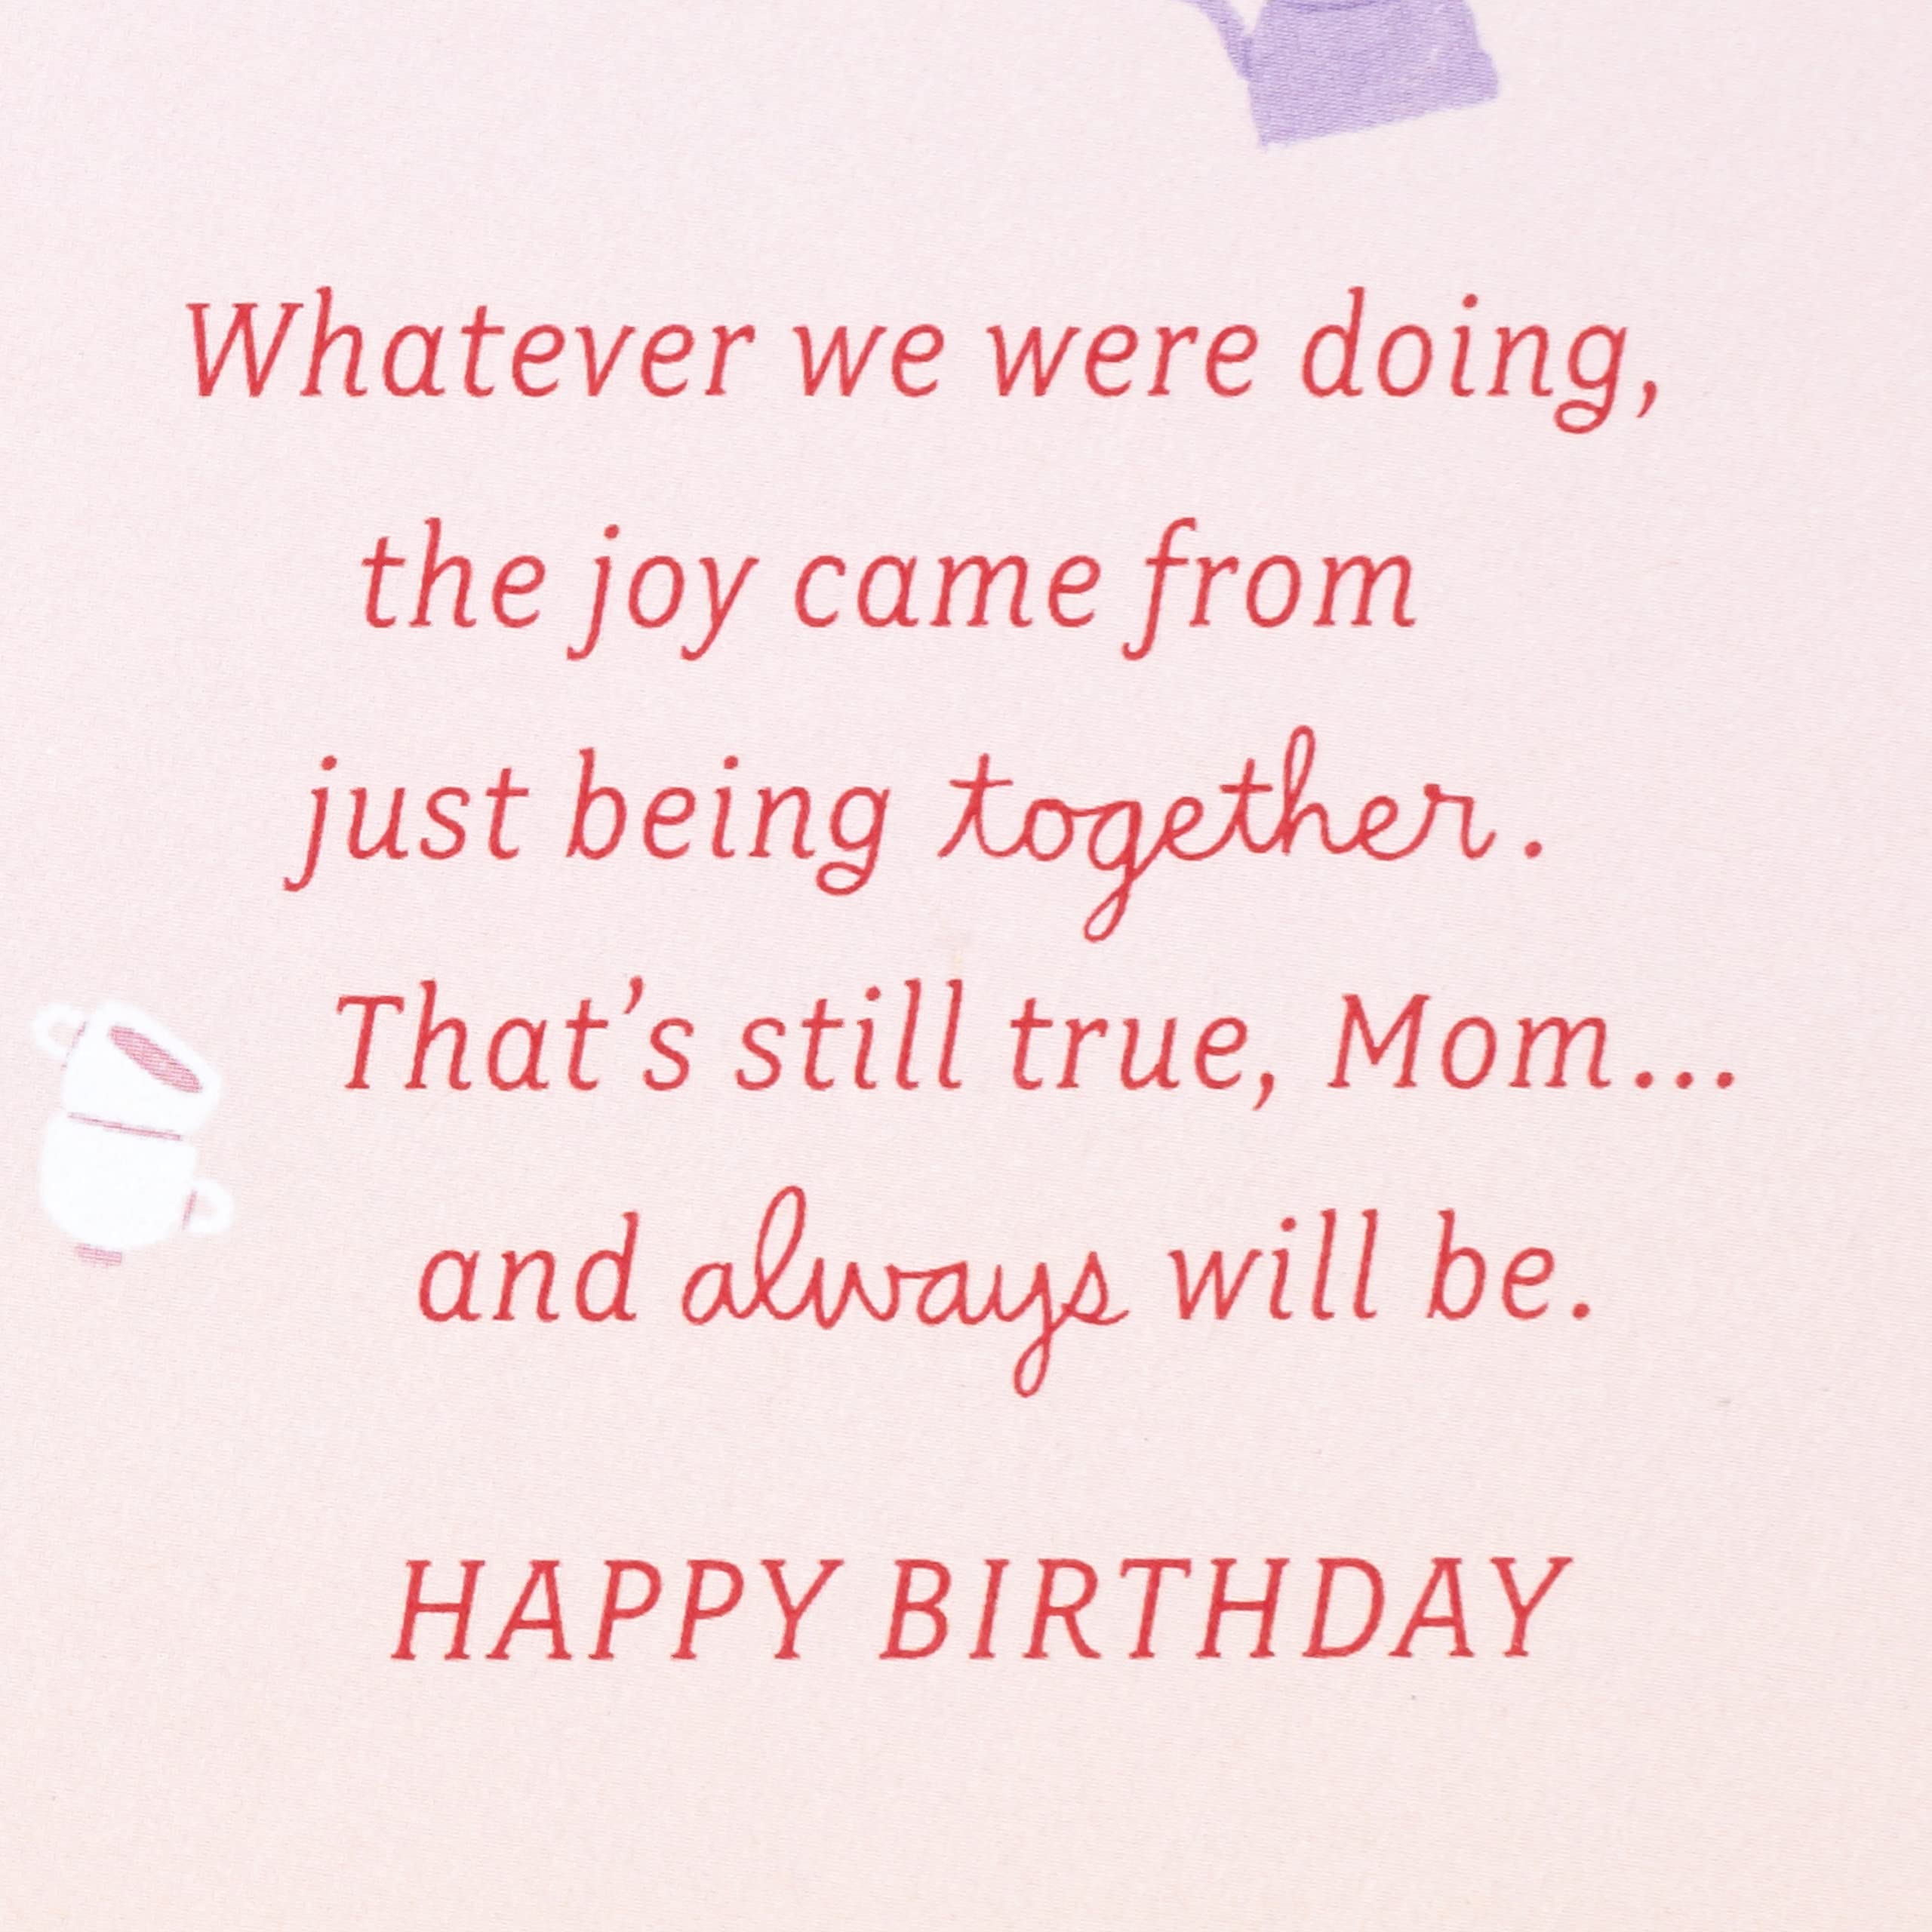 Hallmark Birthday Card for Mom from Daughter (Favorite Memories)